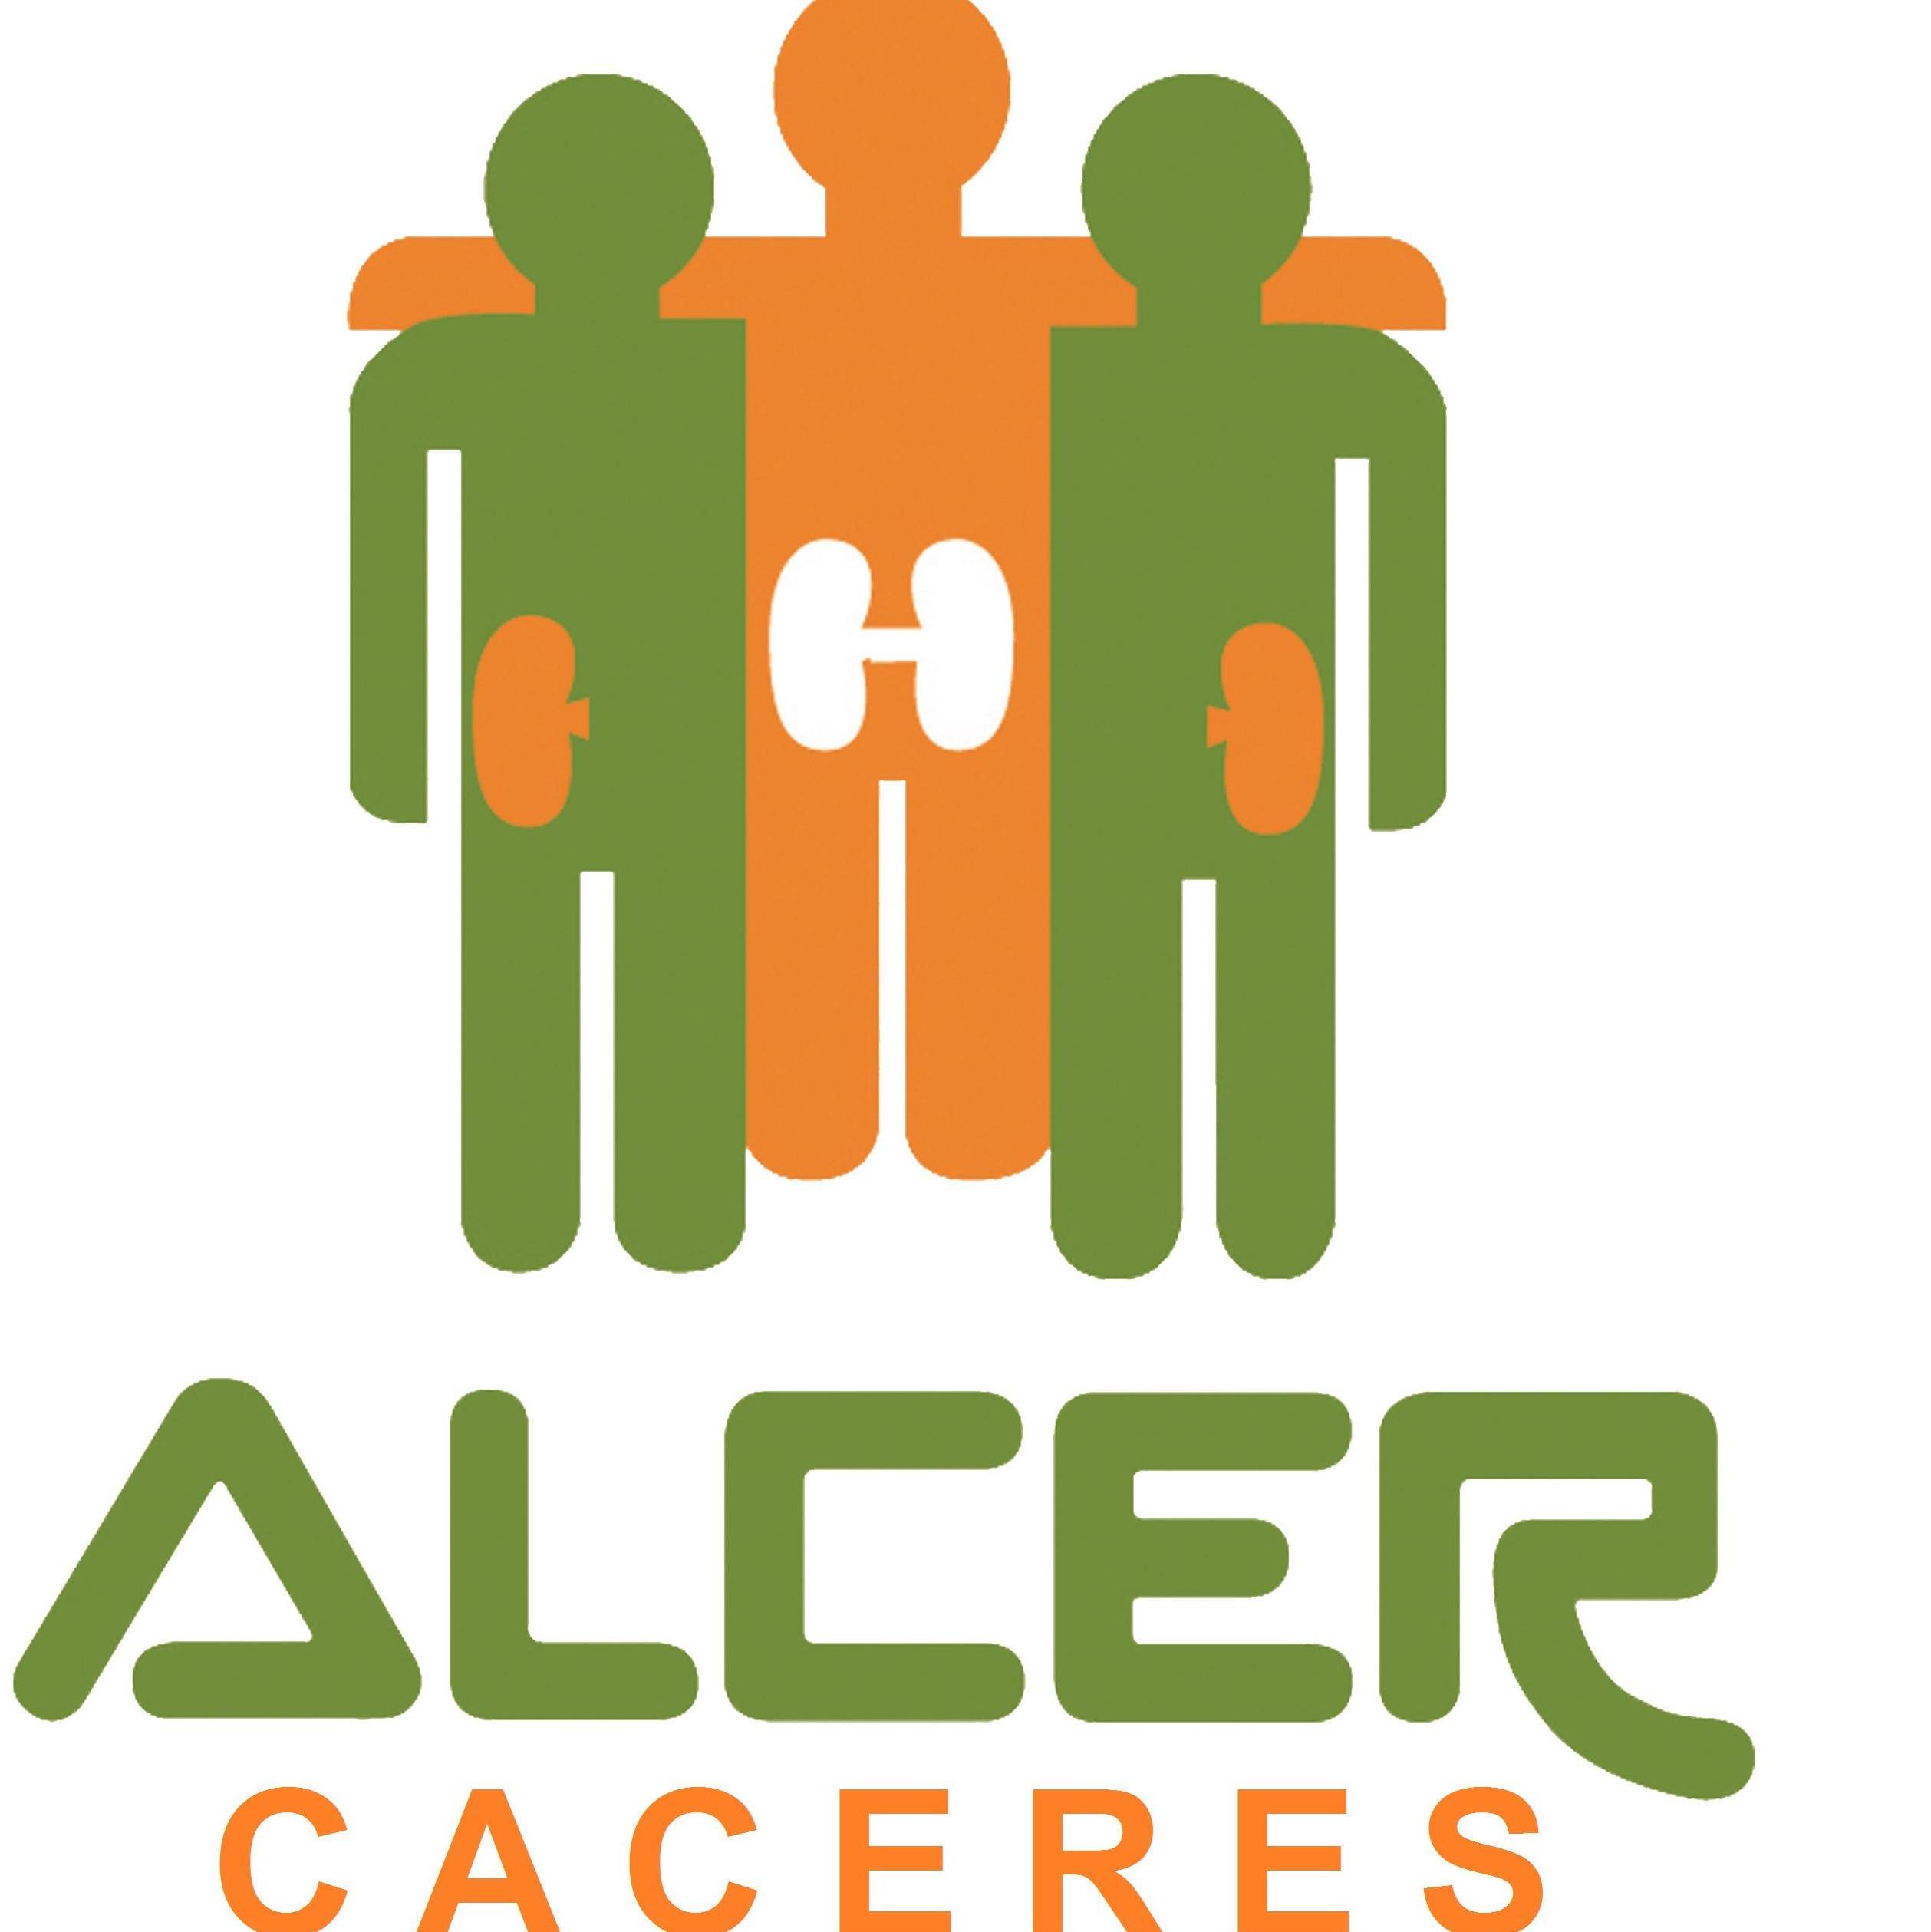 ALCER Cáceres - Su perfil. Votar, valora y comunicate